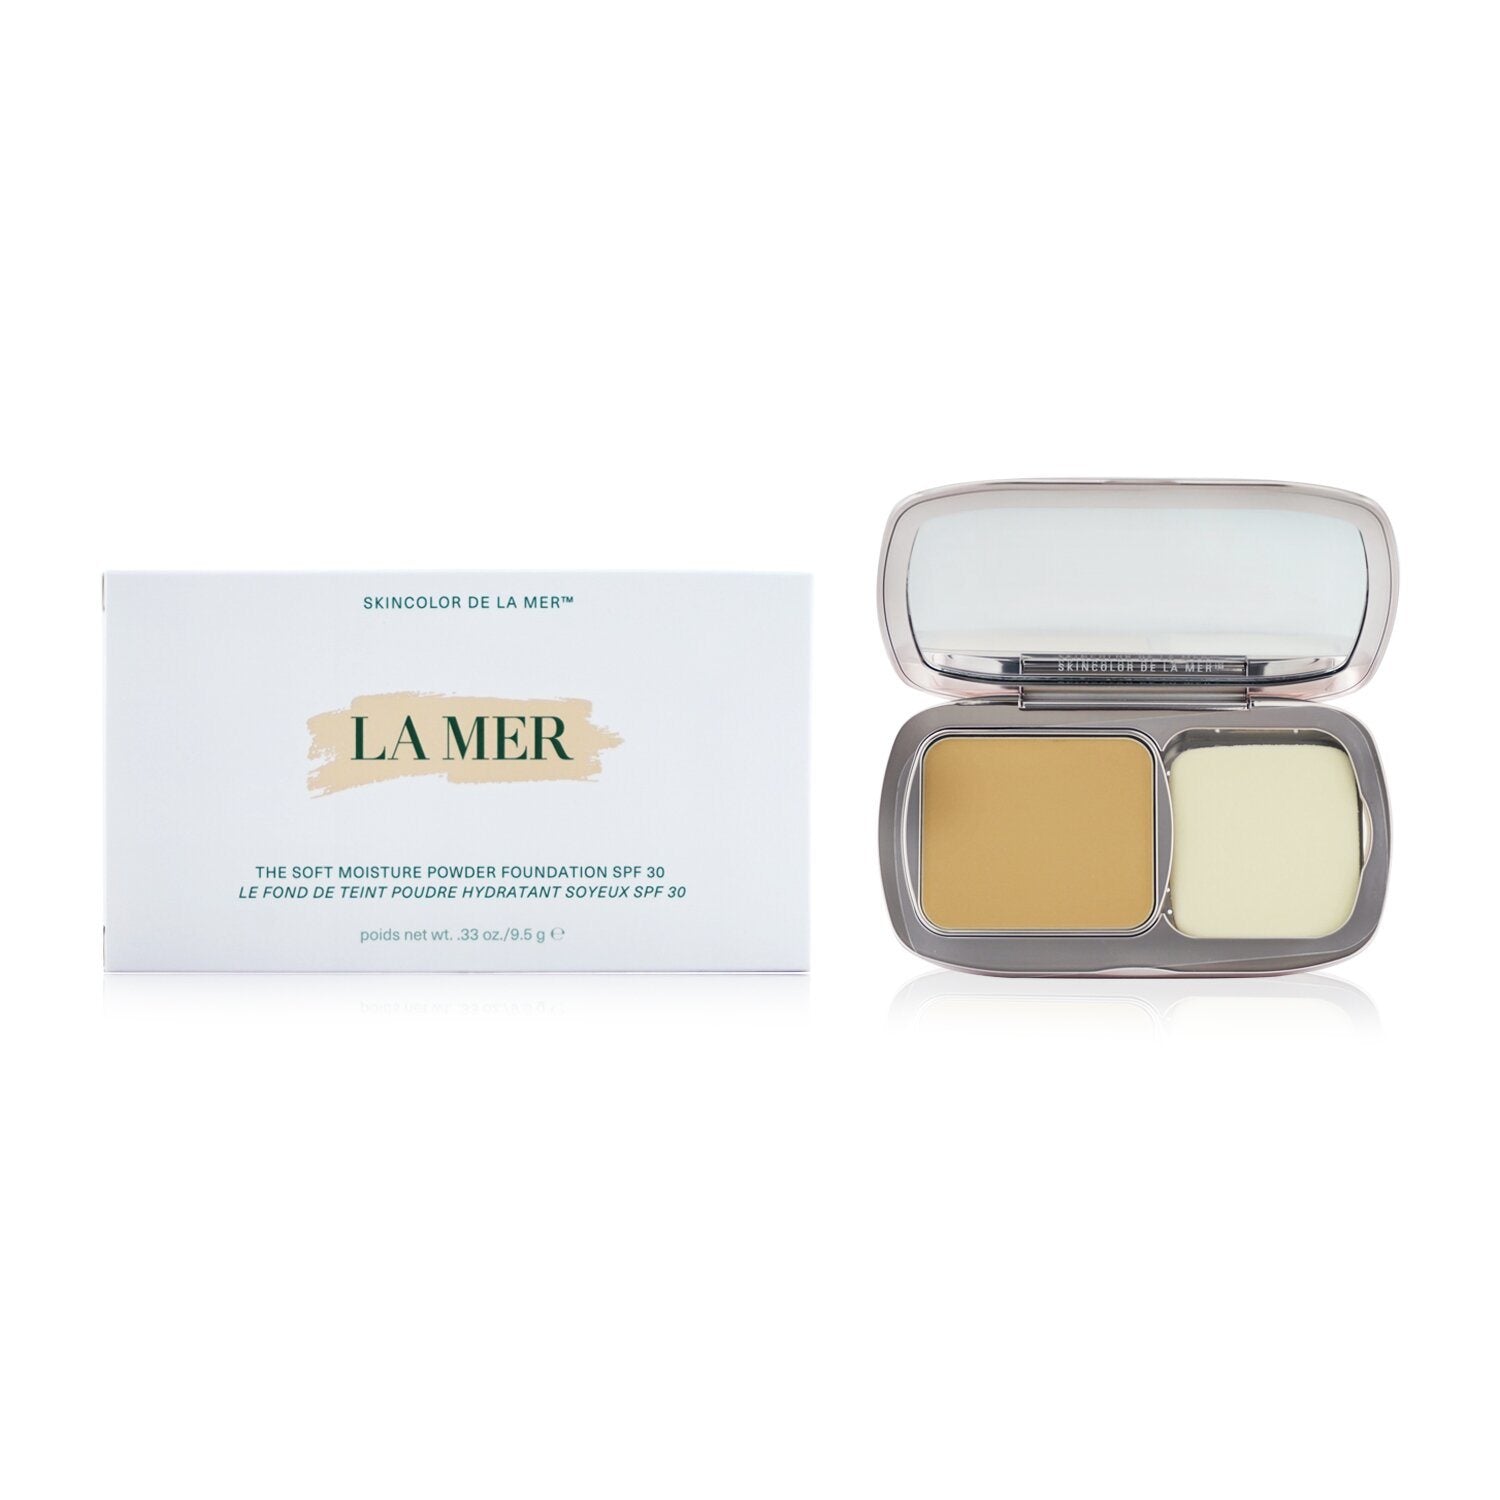 LA MER - The Soft Moisture Powder Foundation SPF 30 - # 43 Caramel - 9.5g/0.33oz 3P's Inclusive Beauty